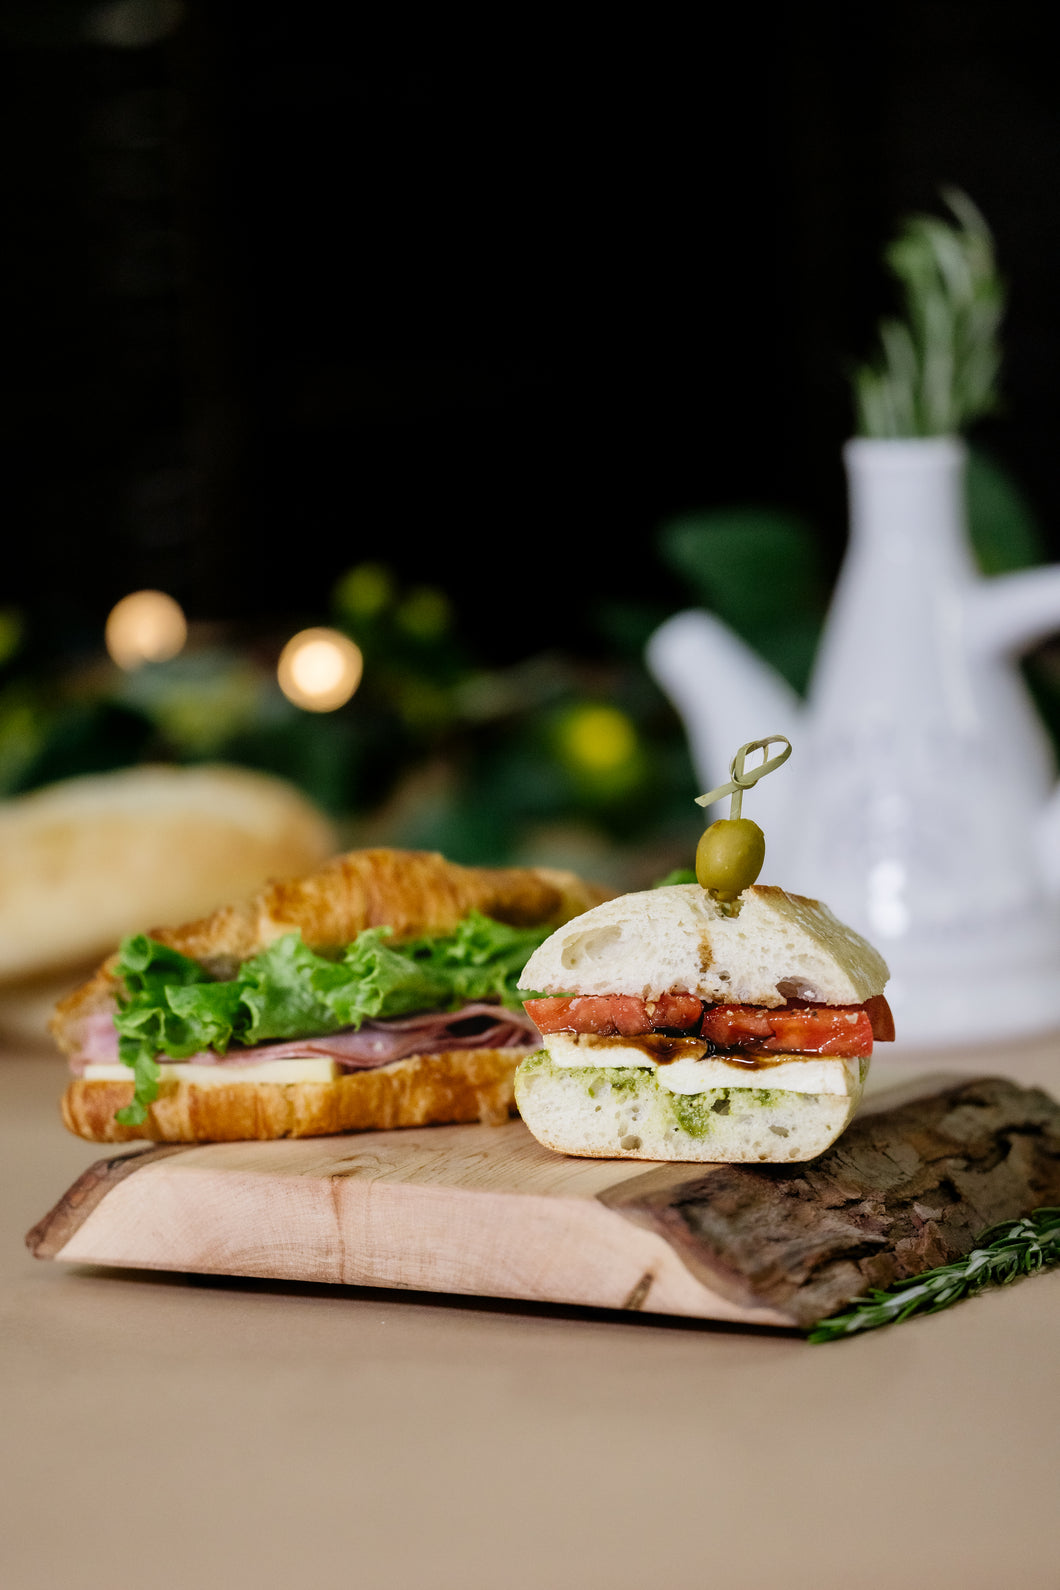 The Deli Sandwich Platter